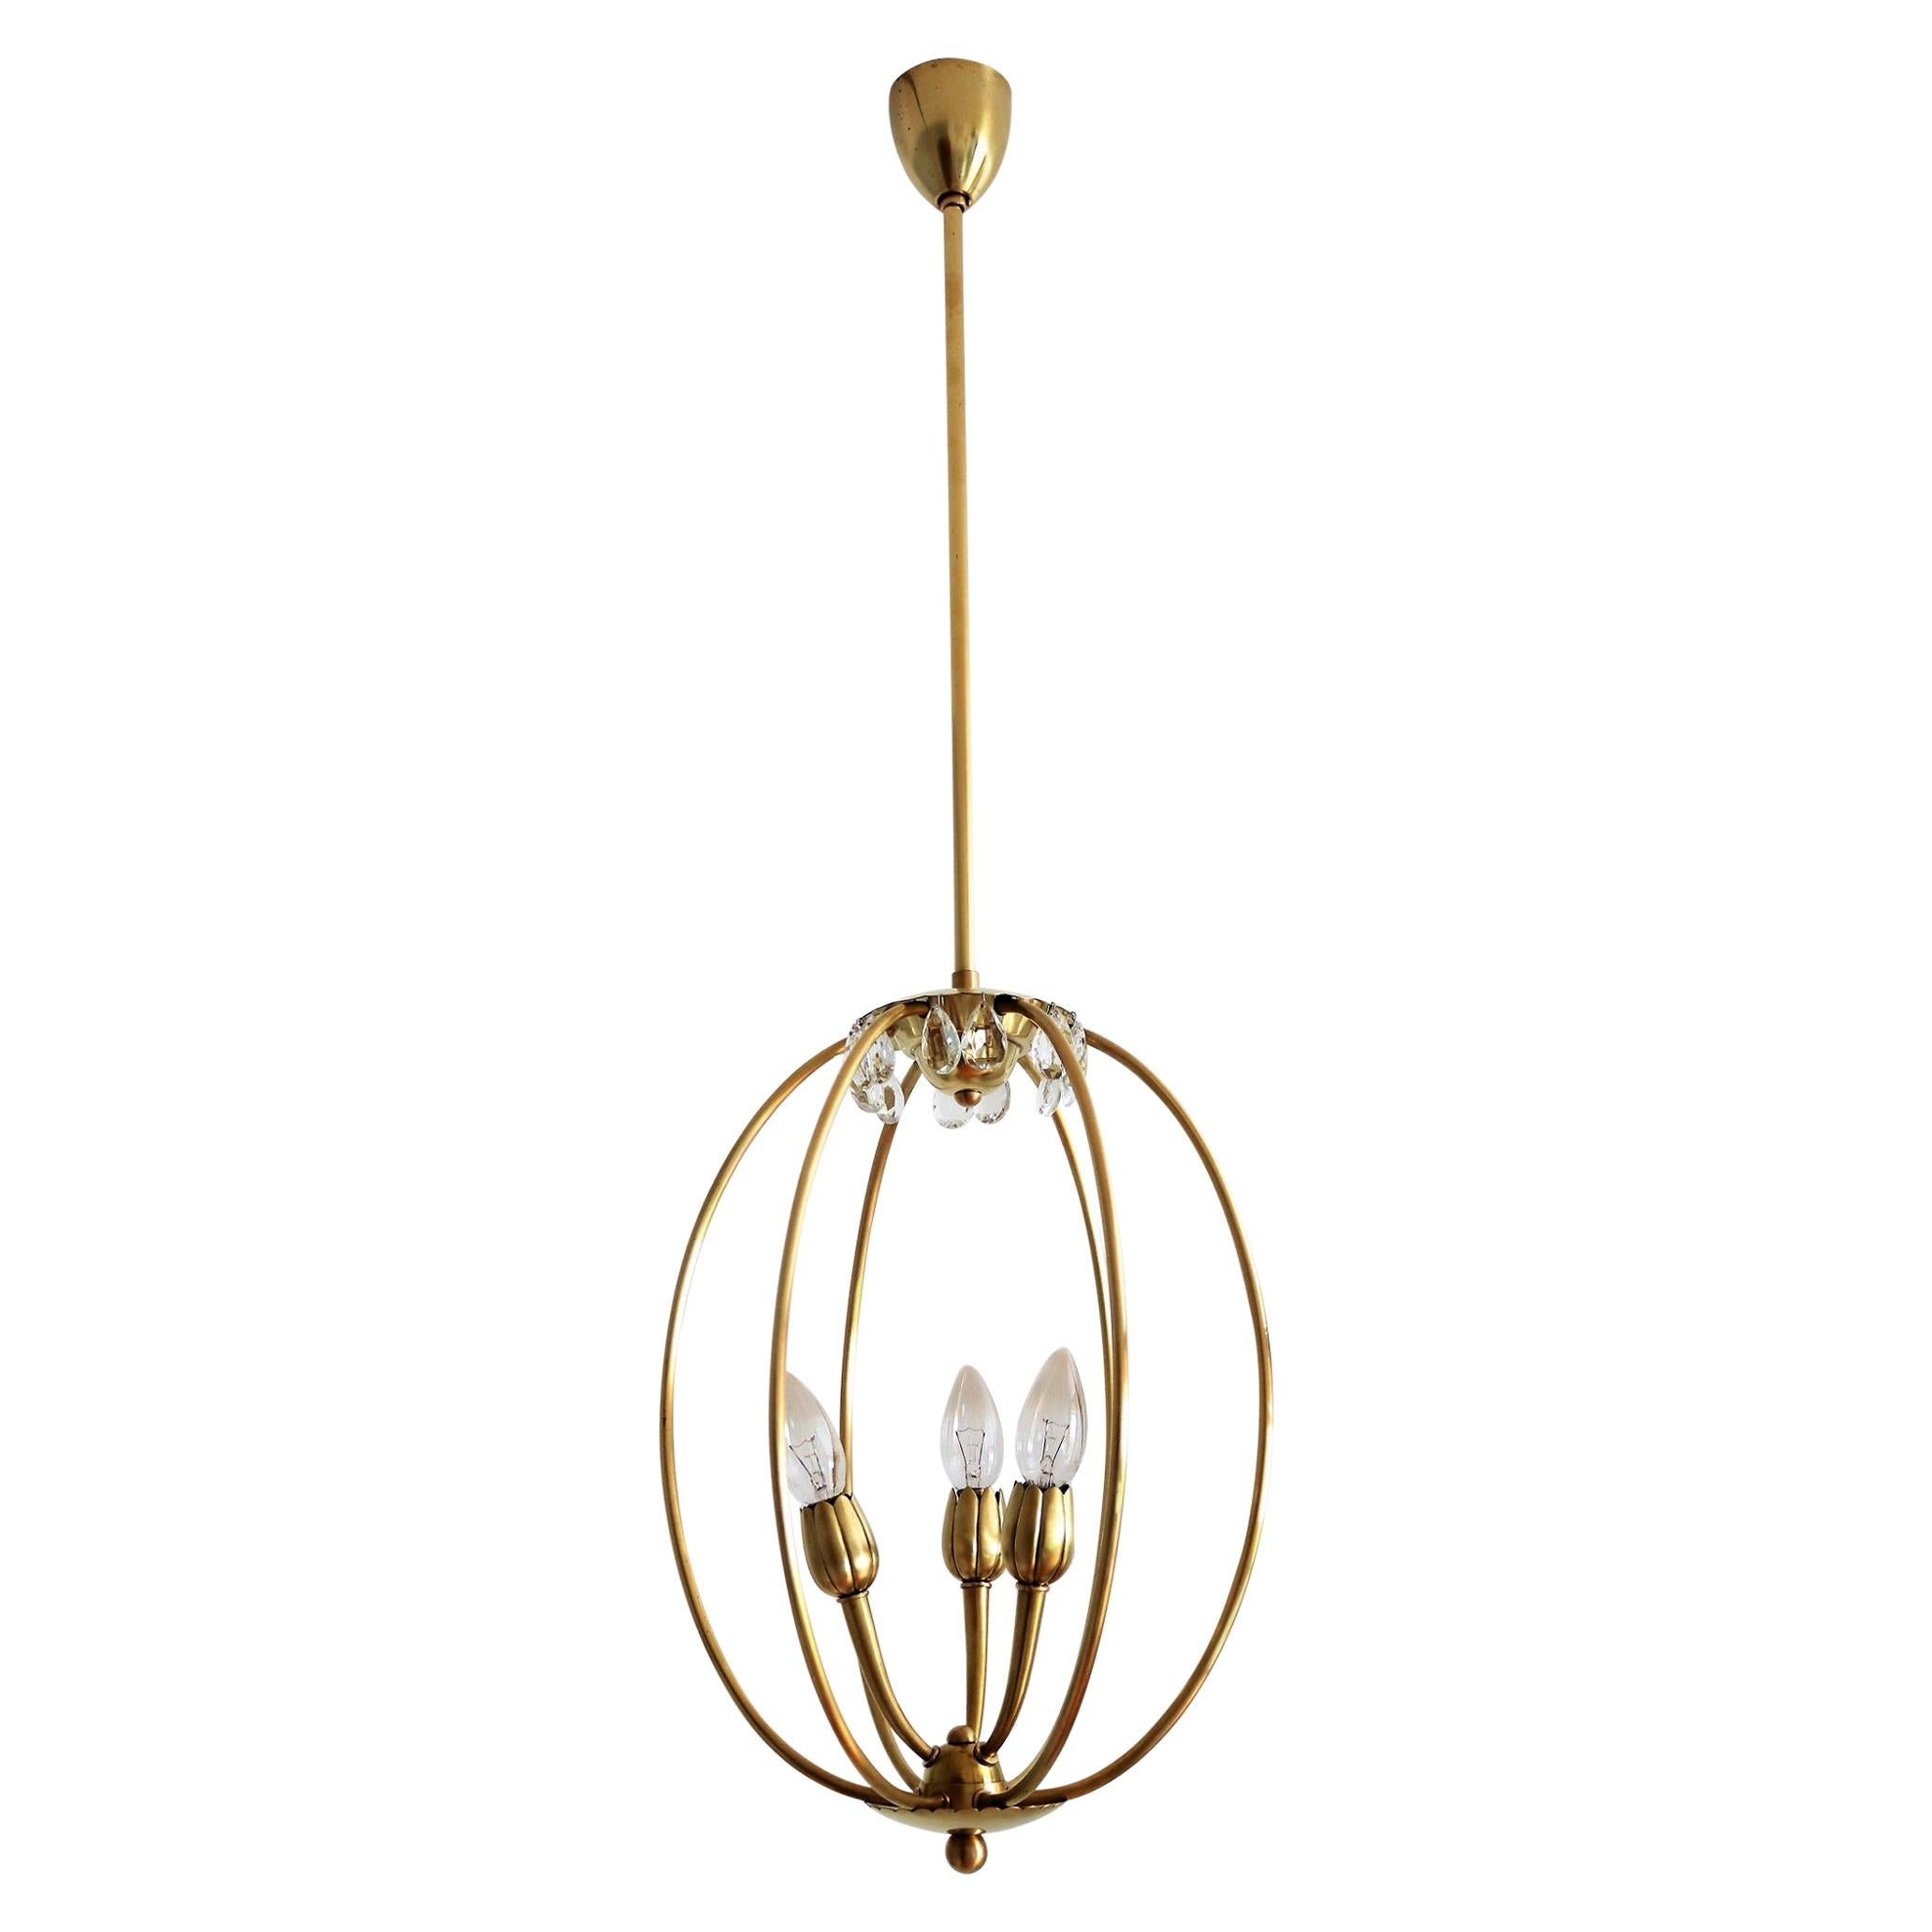 Italian Midcentury Brass Pendant Lamp in Minimal Design, 1950s